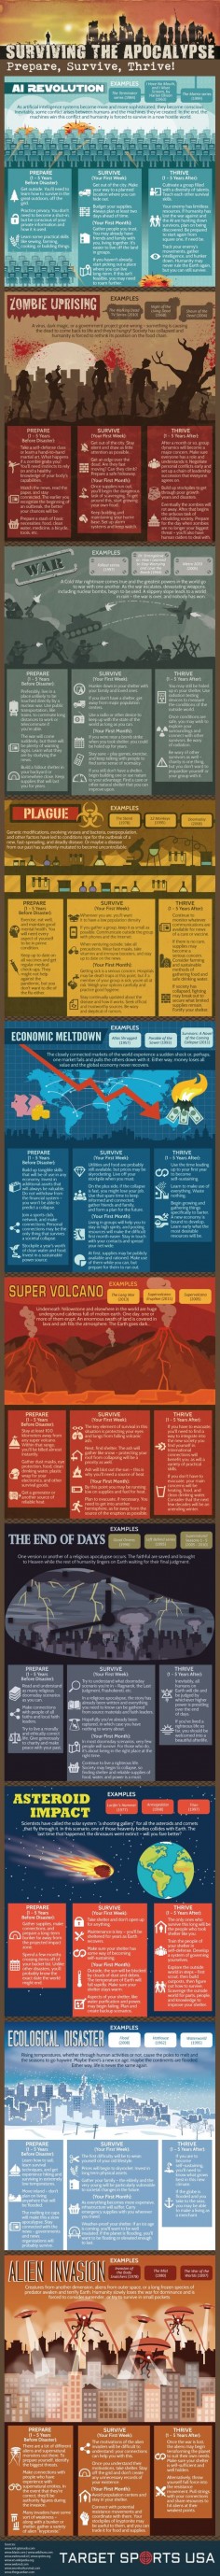 Surviving the Apocalypse: Prepare, Survive, Thrive! #Infographic #ScienceFiction